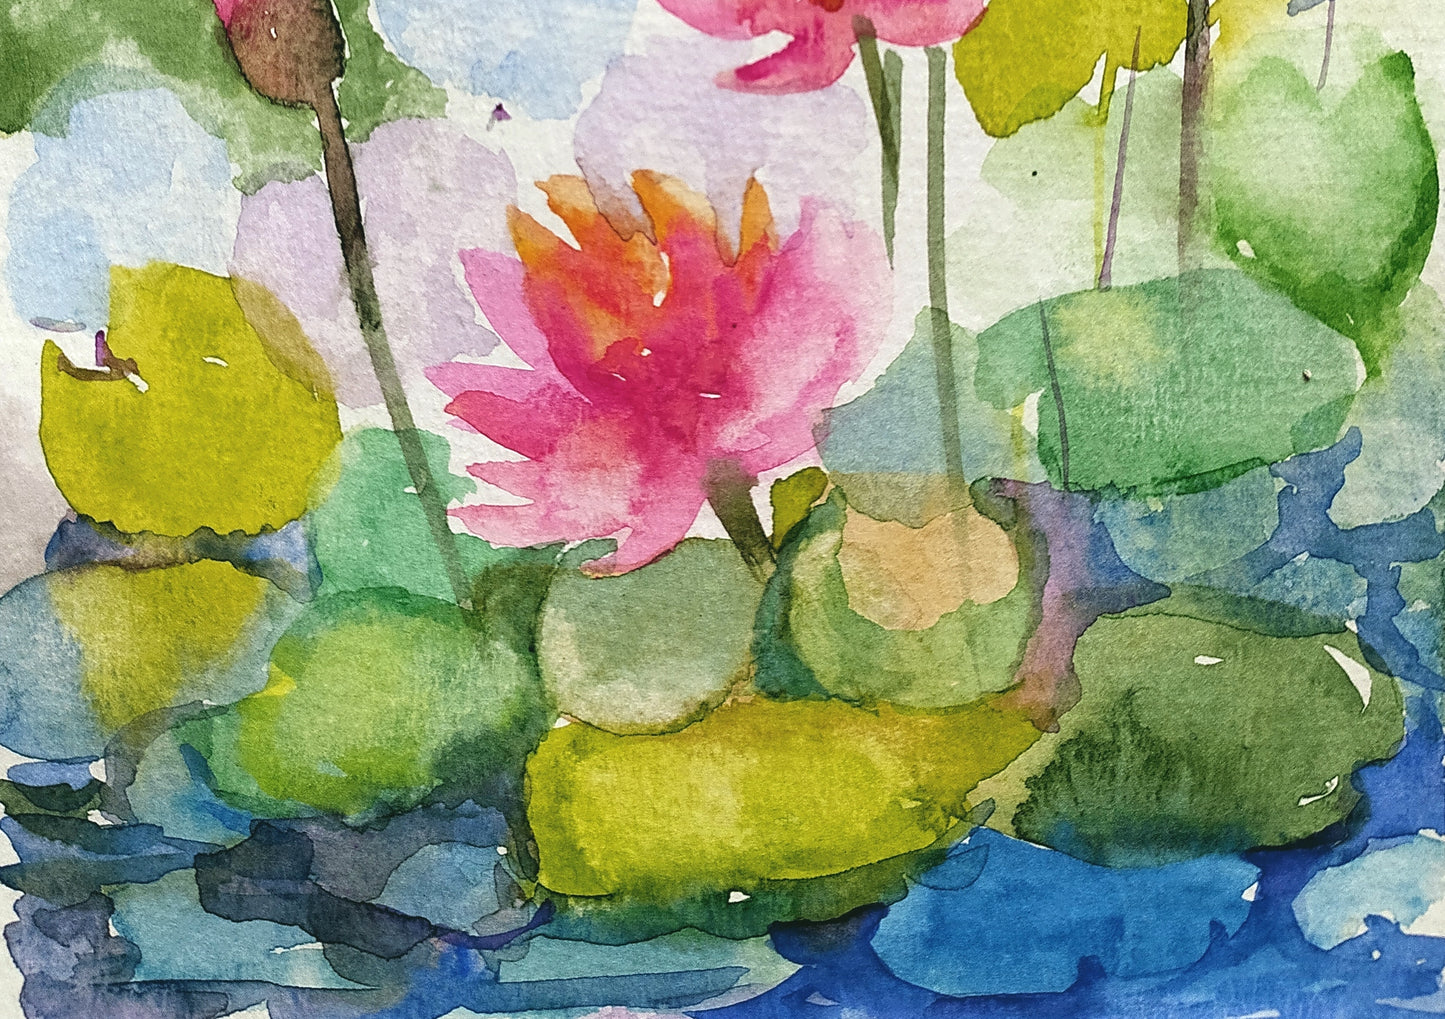 Crimson water lilies, Garden Pond watercolor painting